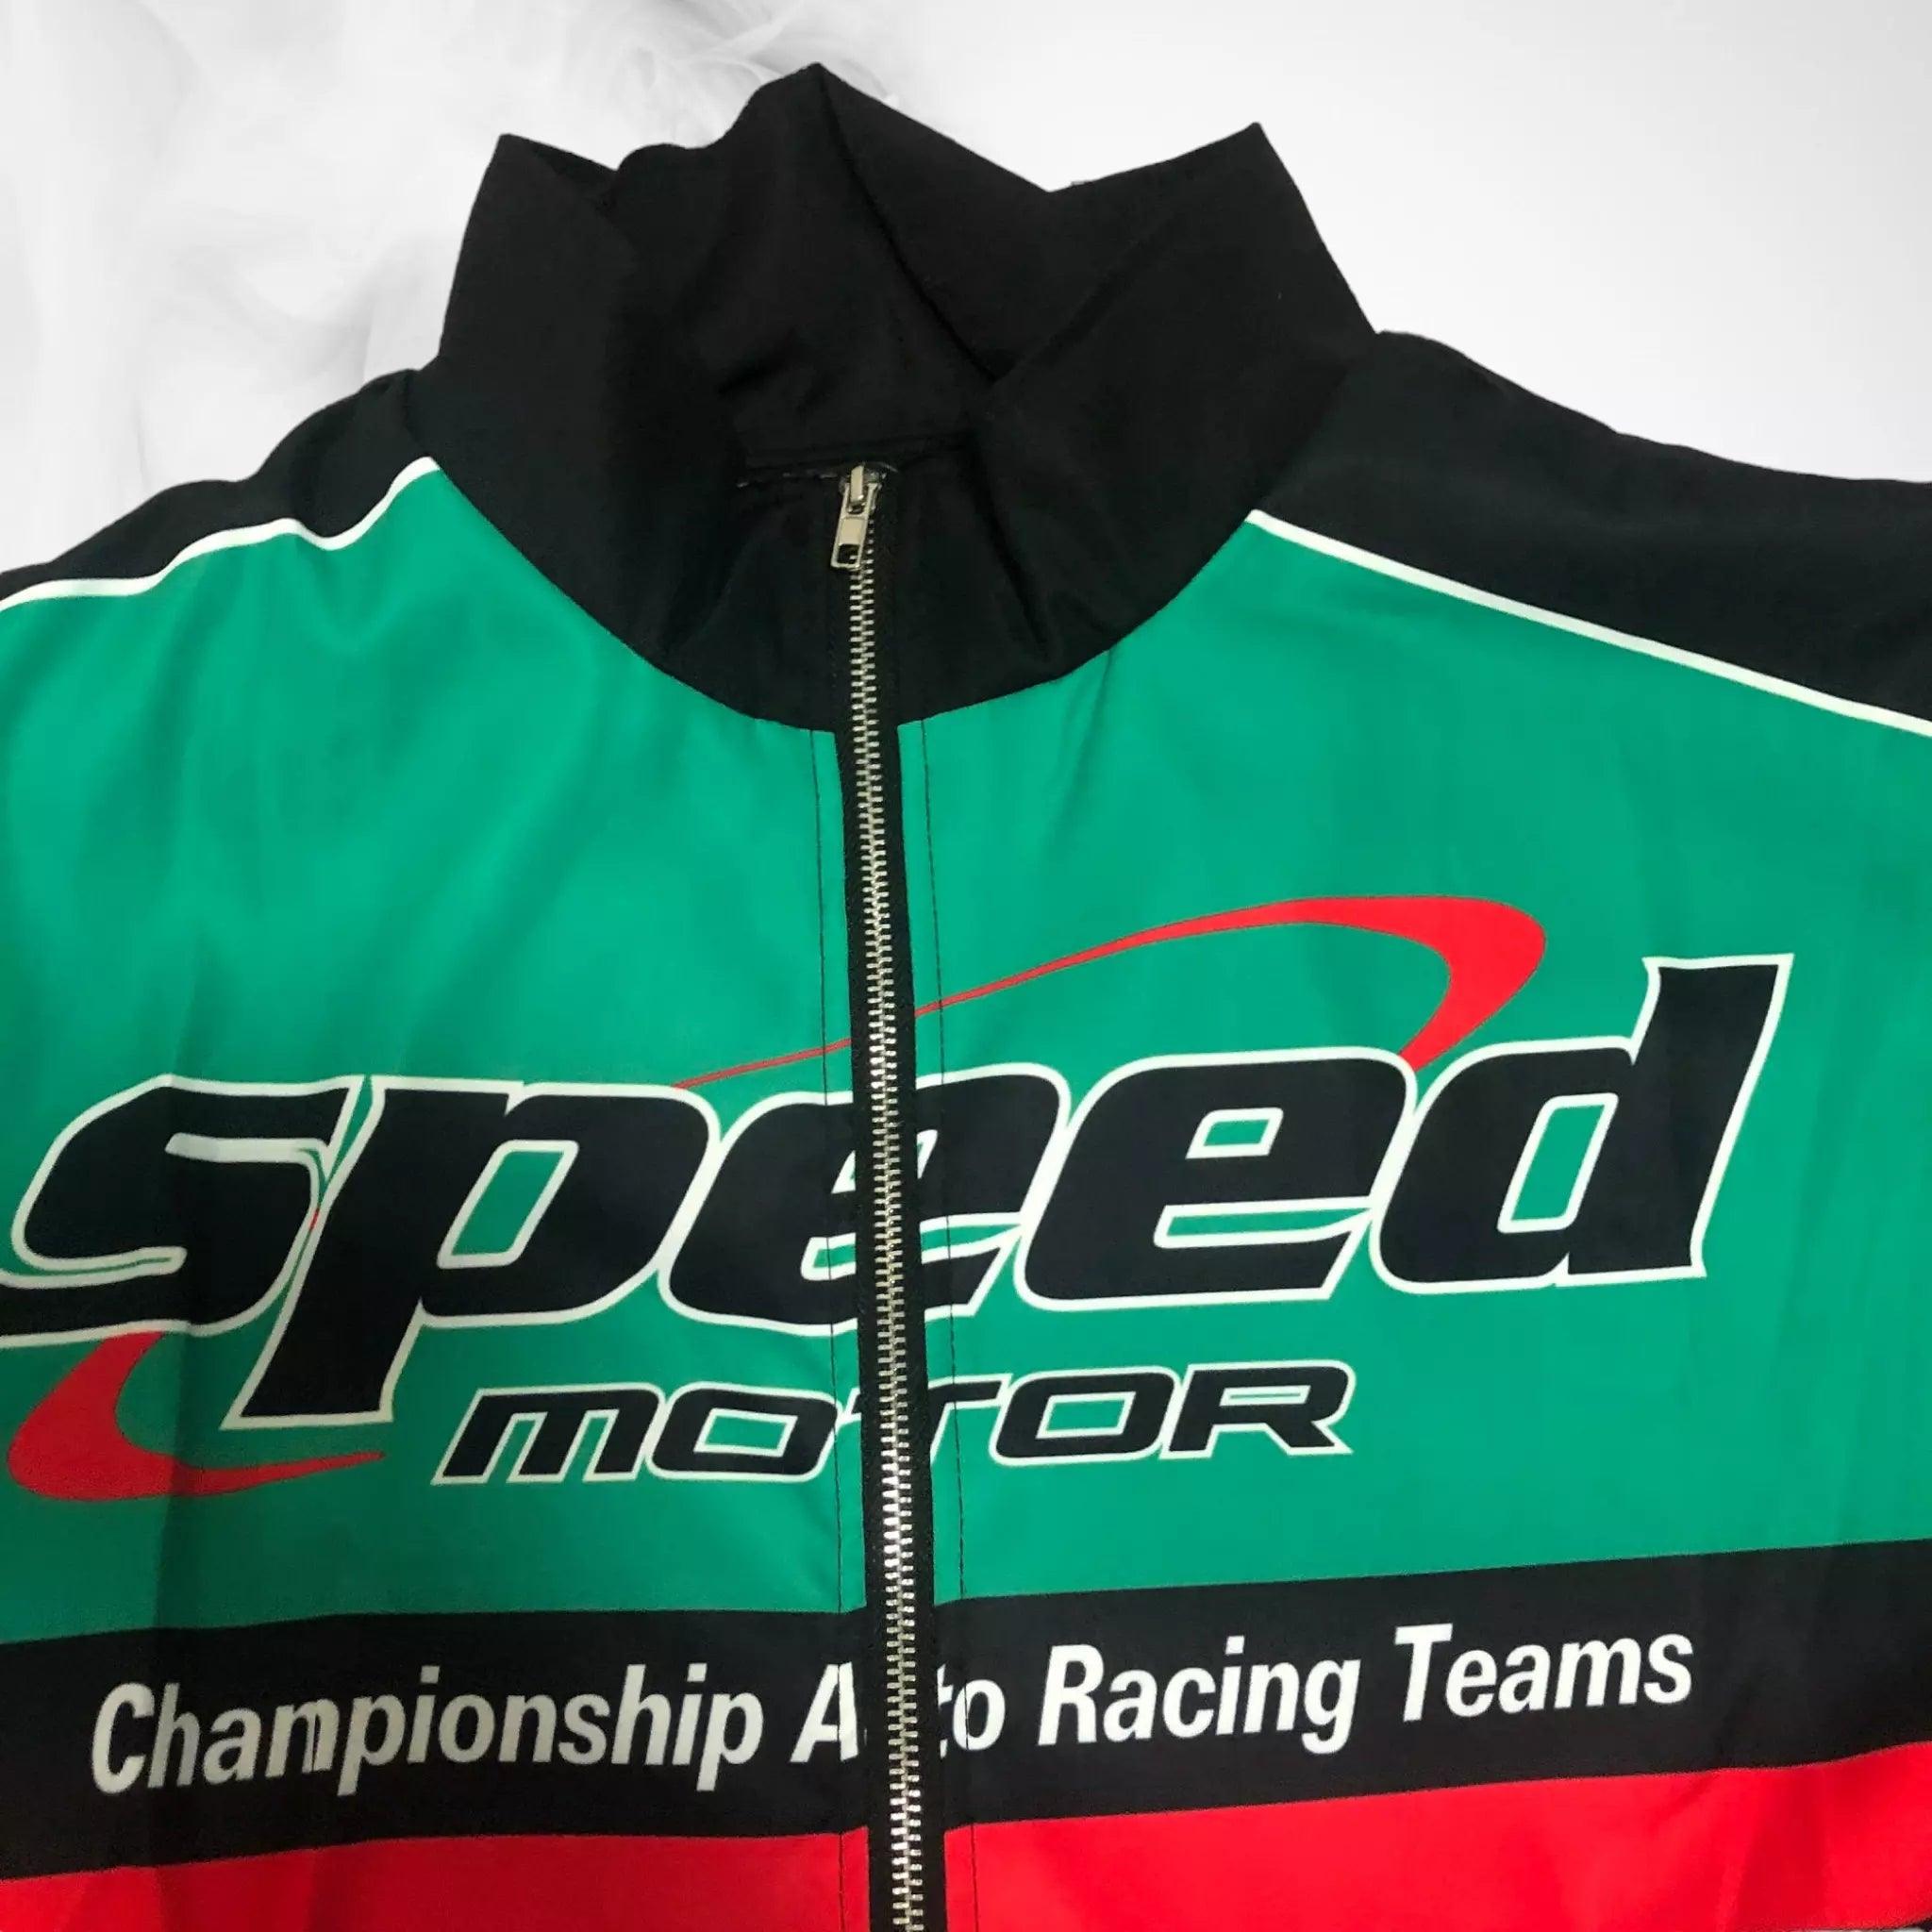 Speed Motor Green racing jacket - Dash Racegear 